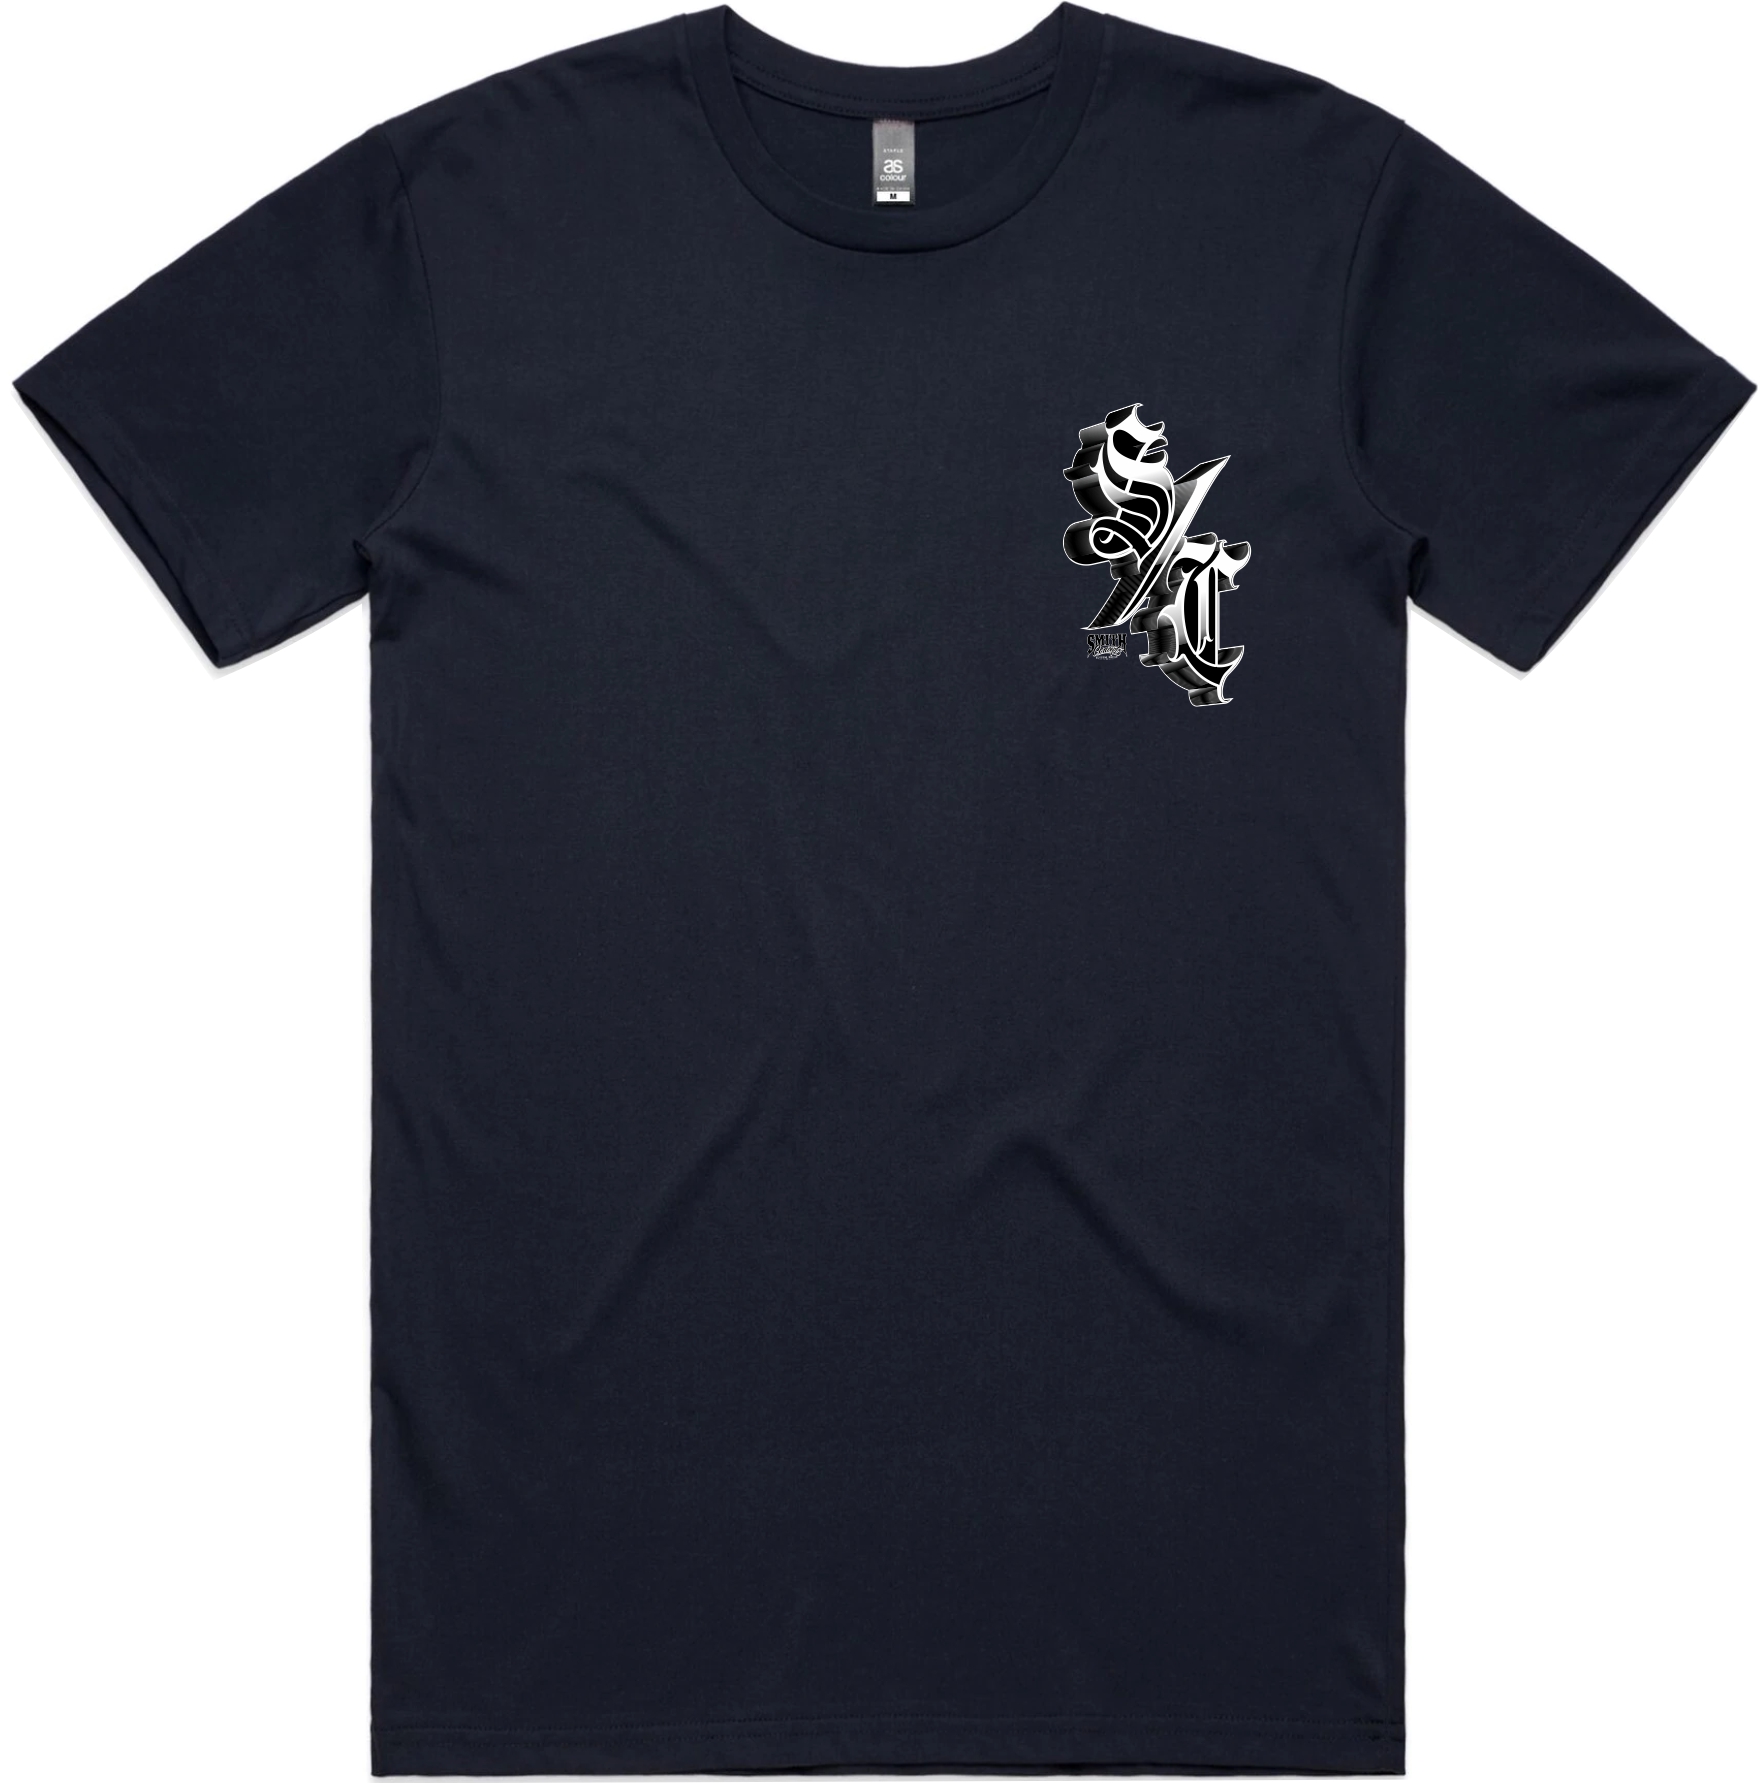 S/C Tshirt - Smith Concepts